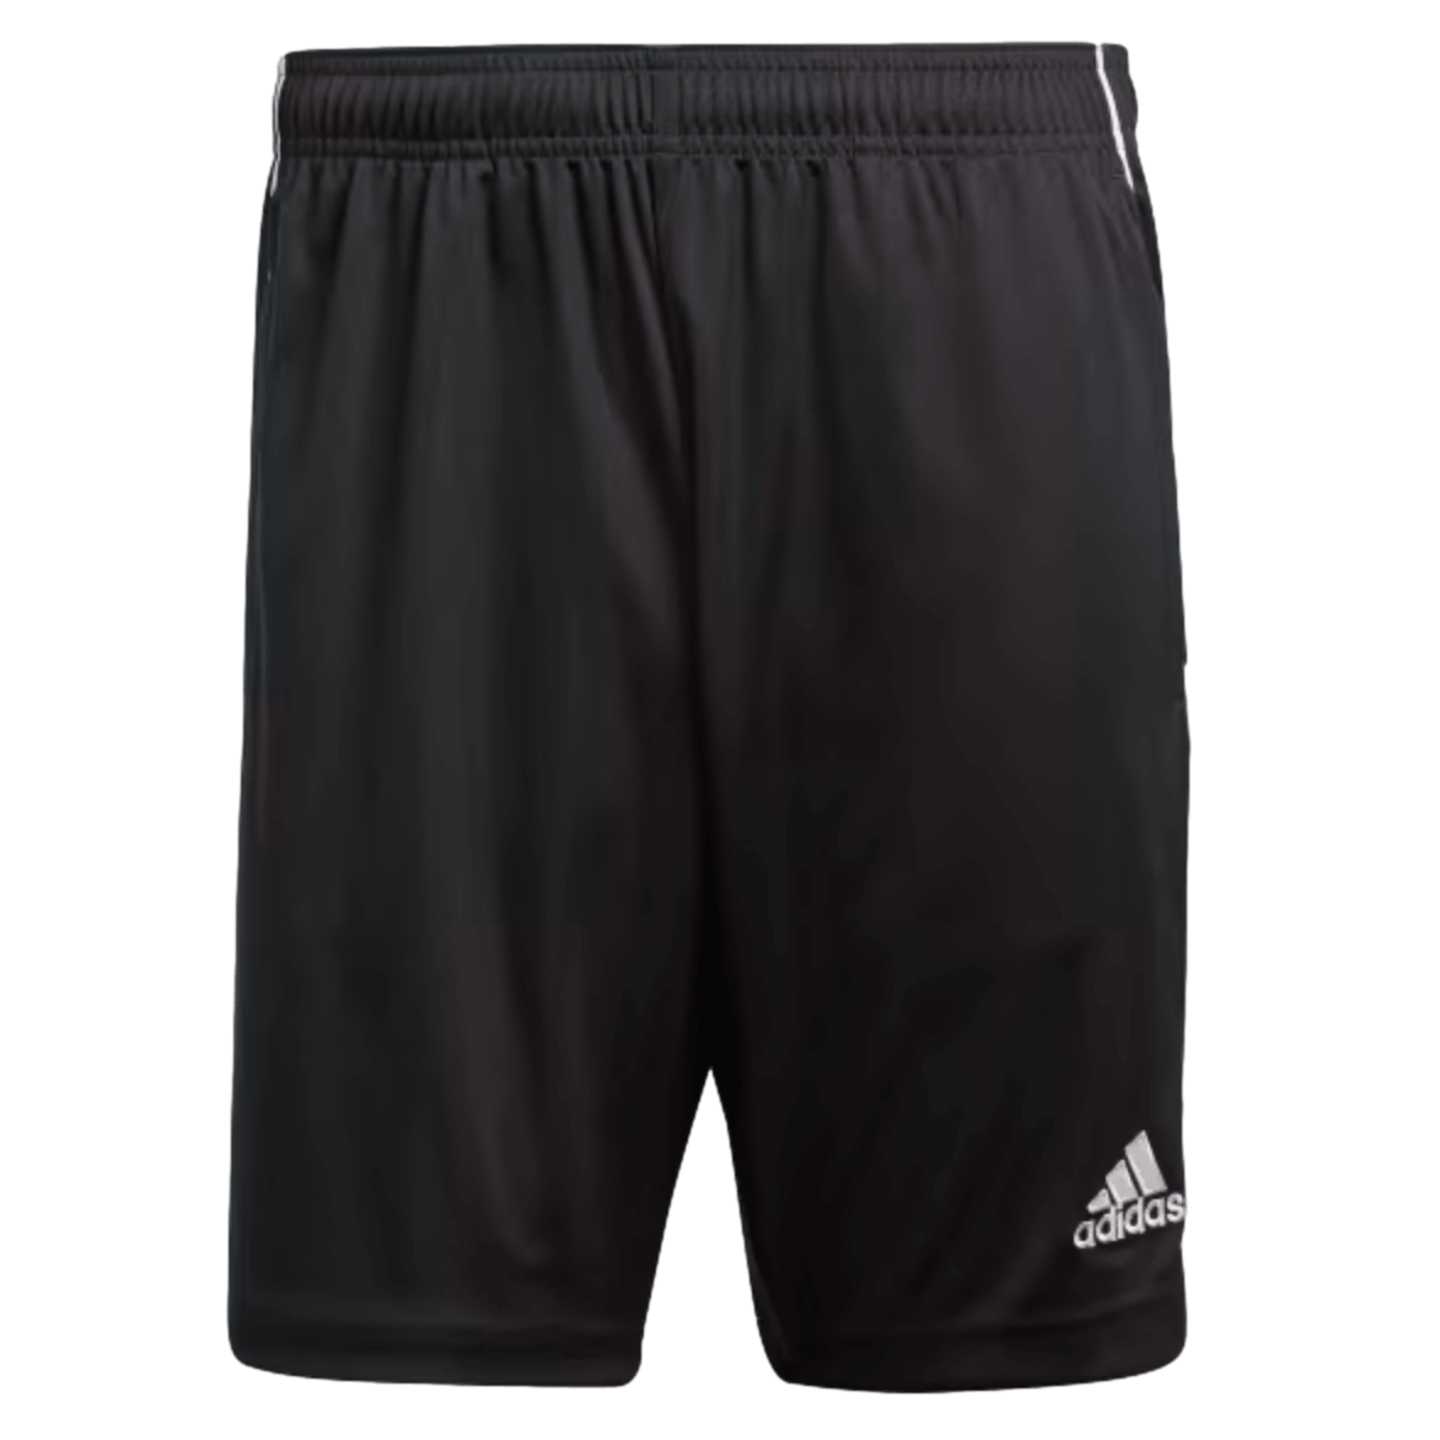 Adidas Core 18 Shorts